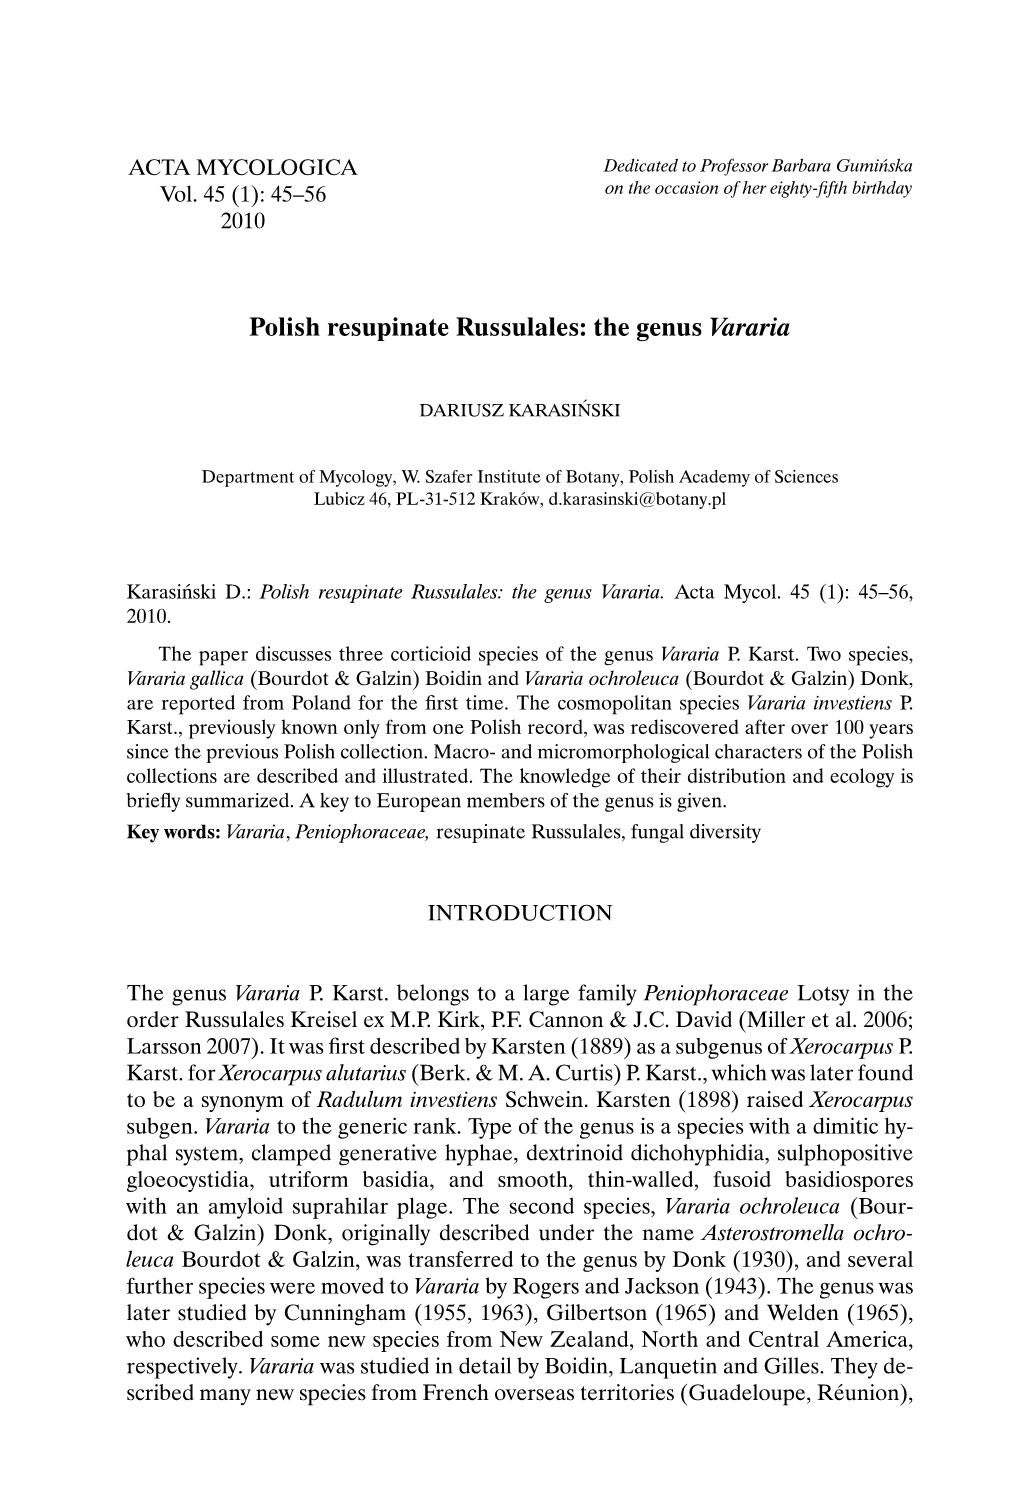 Polish Resupinate Russulales: the Genus Vararia